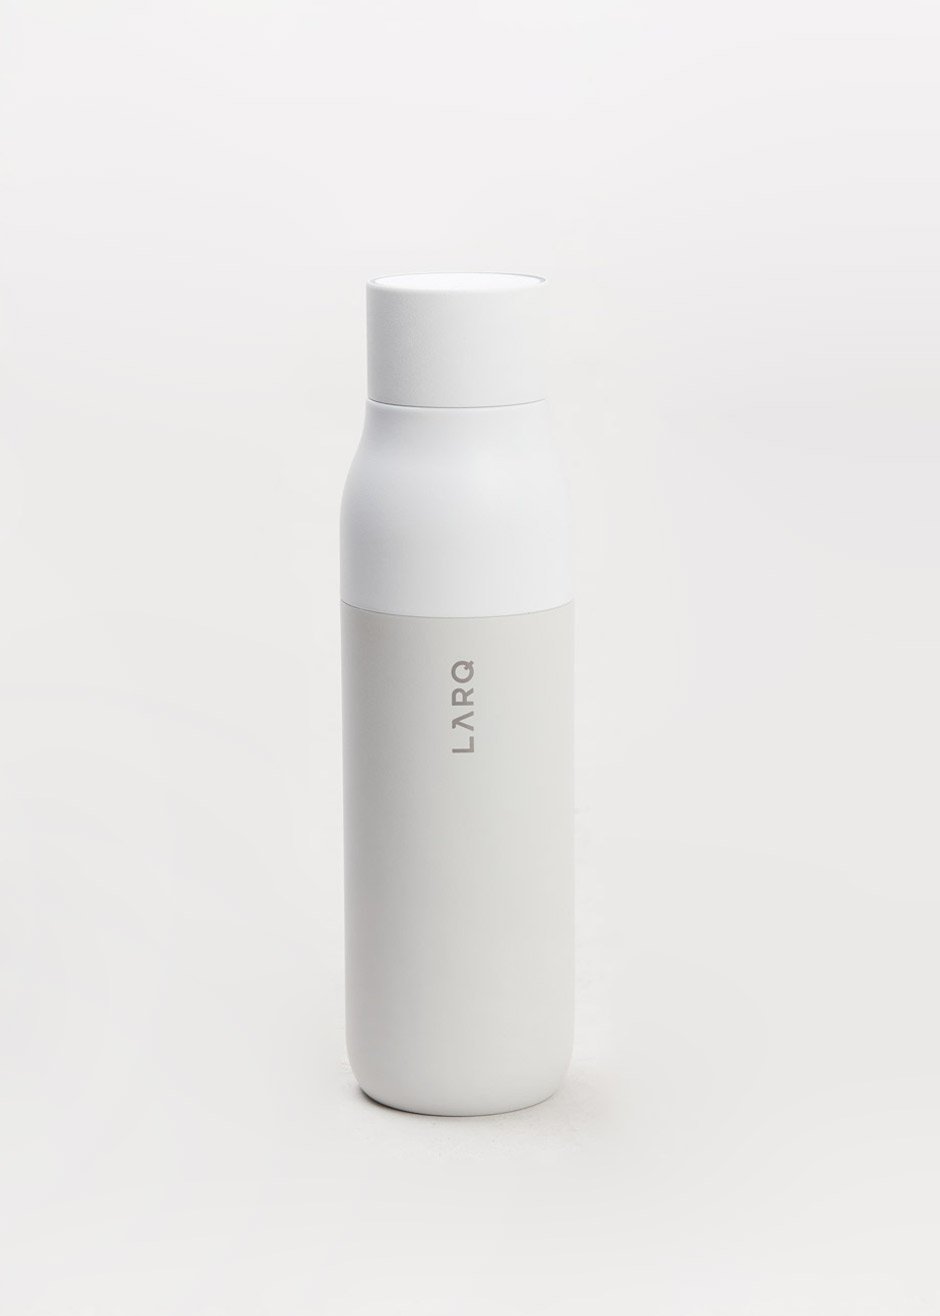 LARQ x TFS Self-Cleaning Water Bottle - Granite White - 3